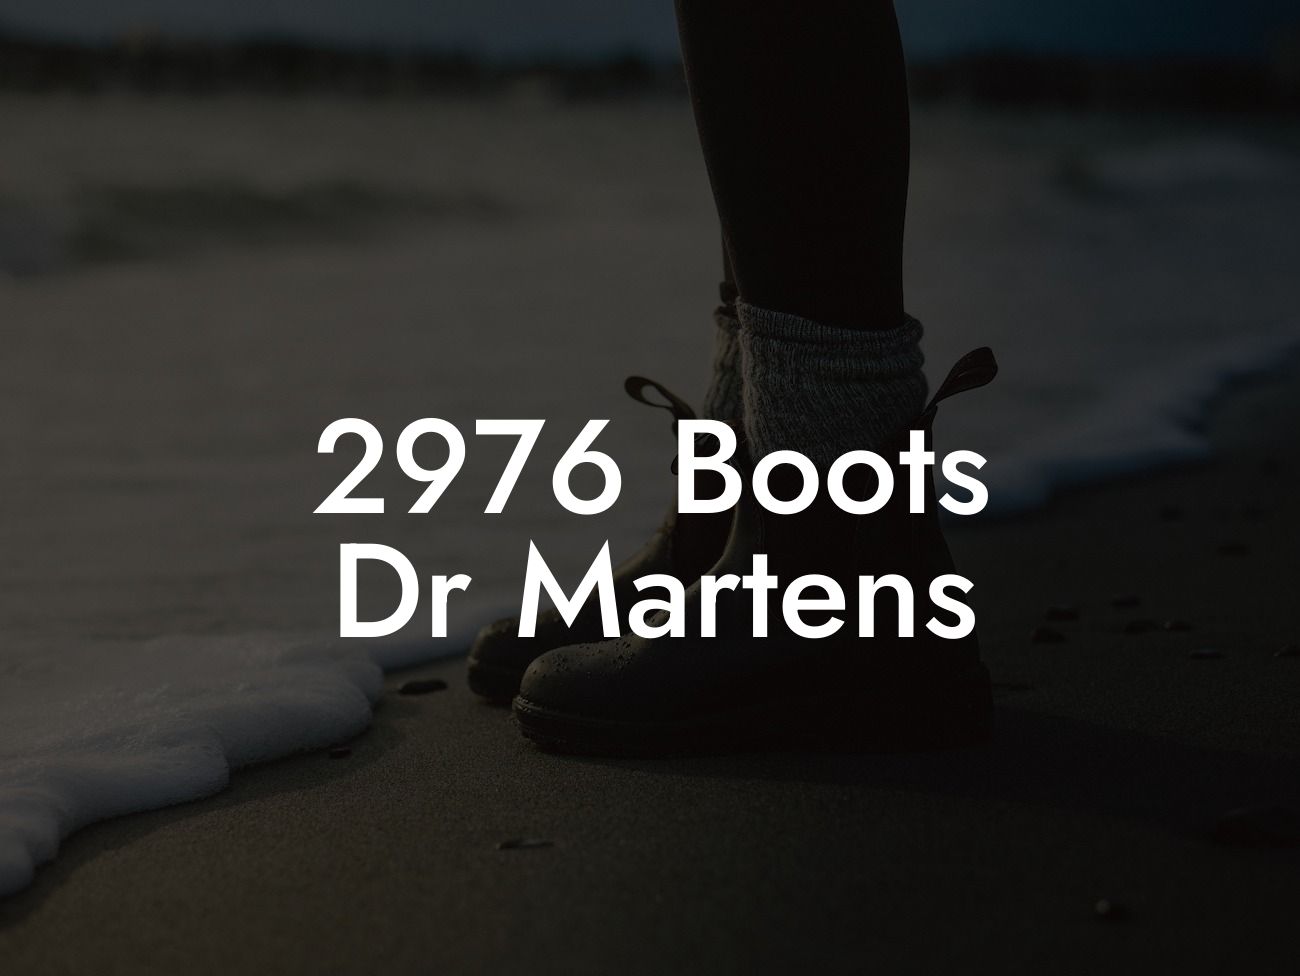 2976 Boots Dr Martens